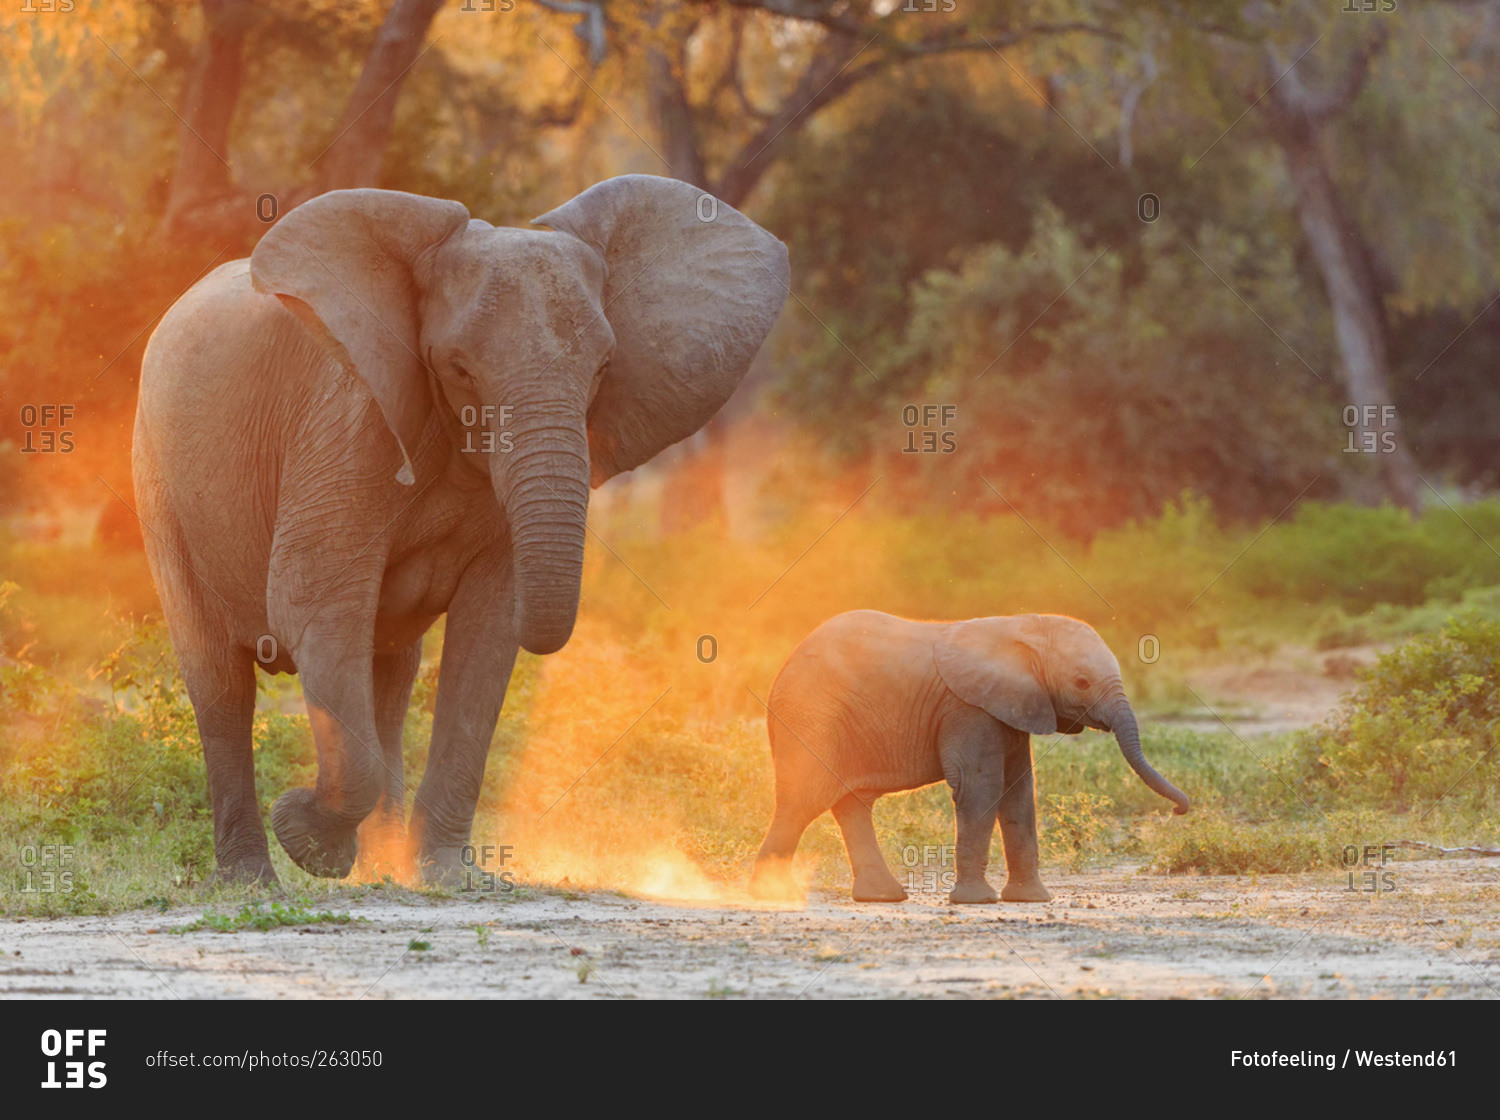 Cow elephant with baby elephant